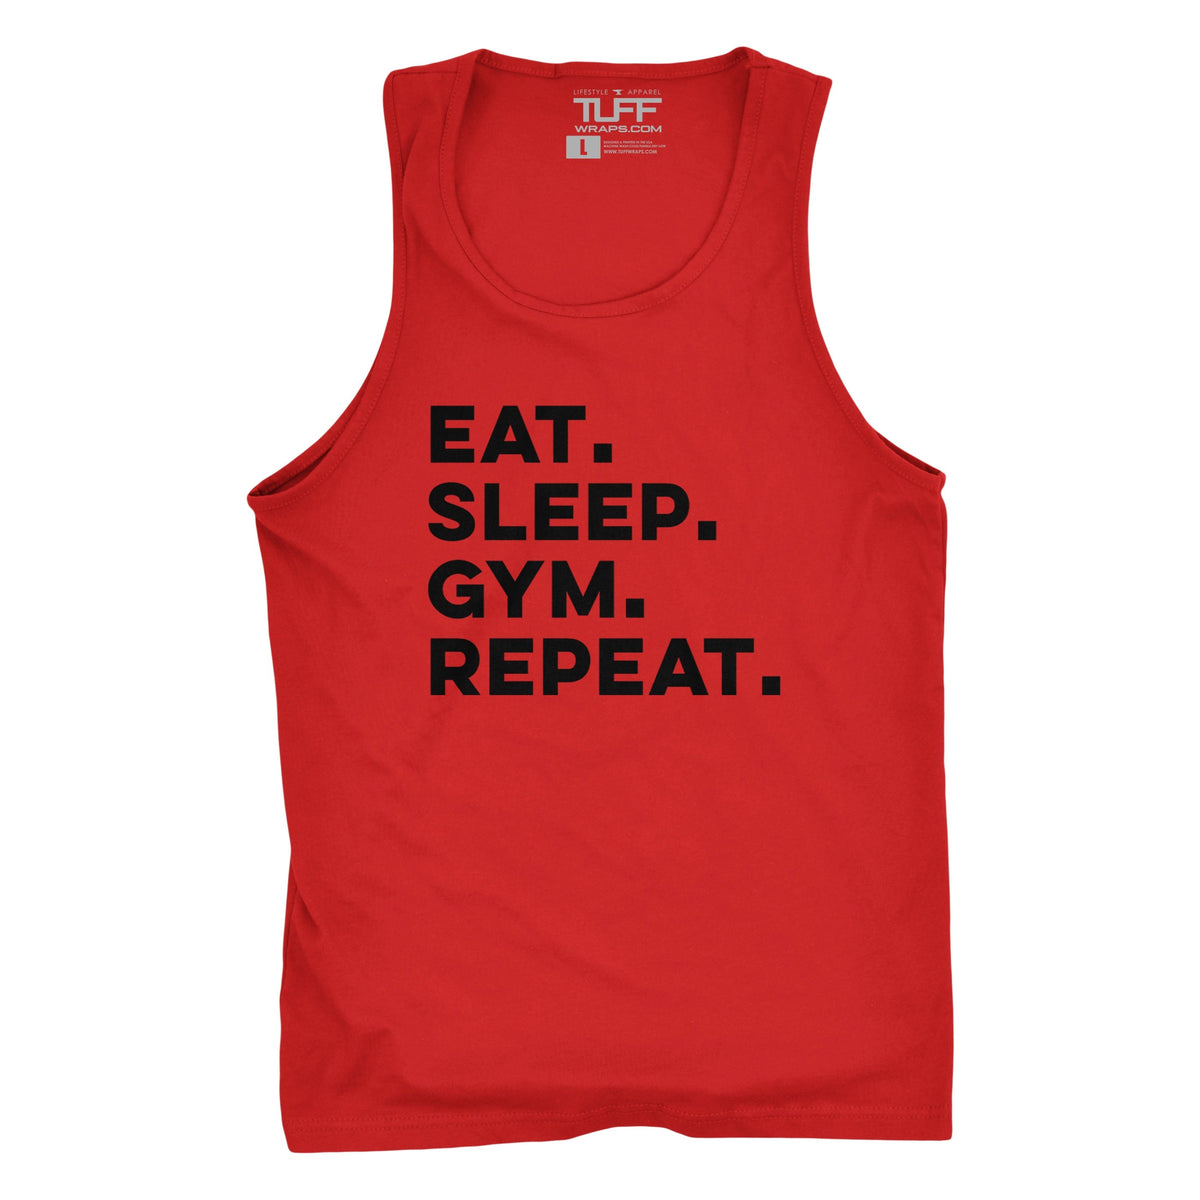 Eat. Sleep. Gym. Repeat. Tank S / Red TuffWraps.com